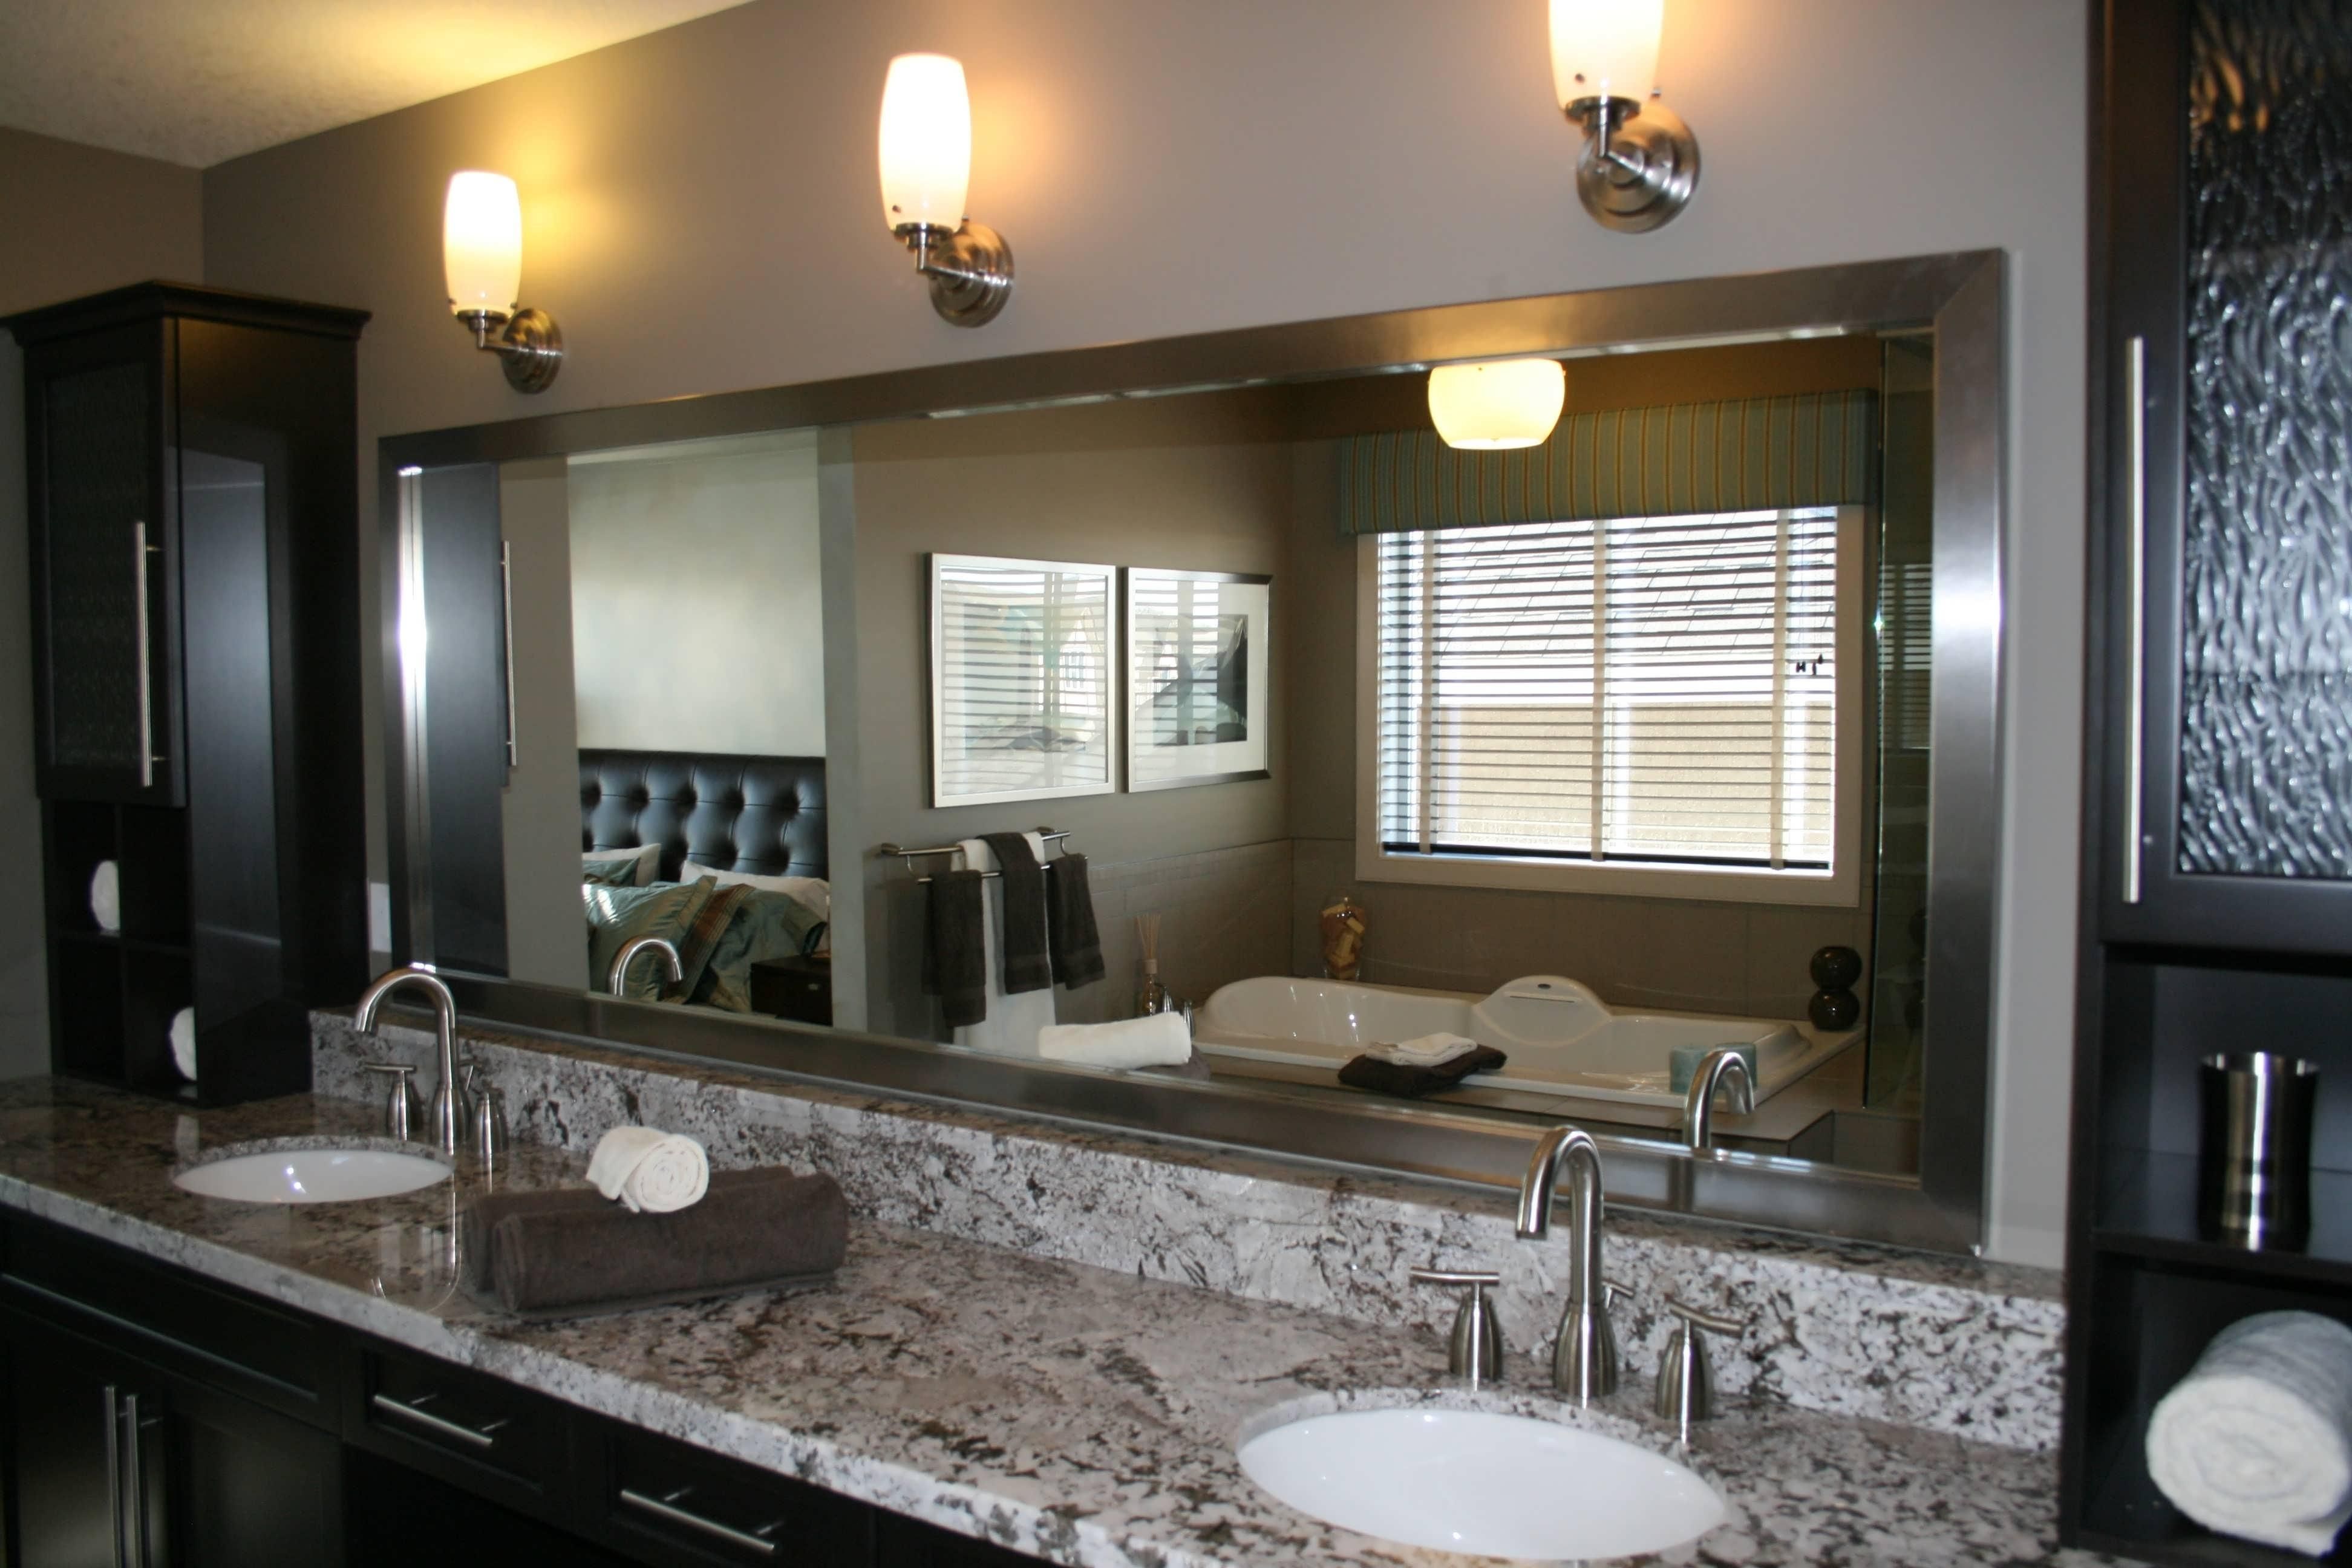 20 Ideas of Large Mirrors for Bathroom Walls | Mirror Ideas